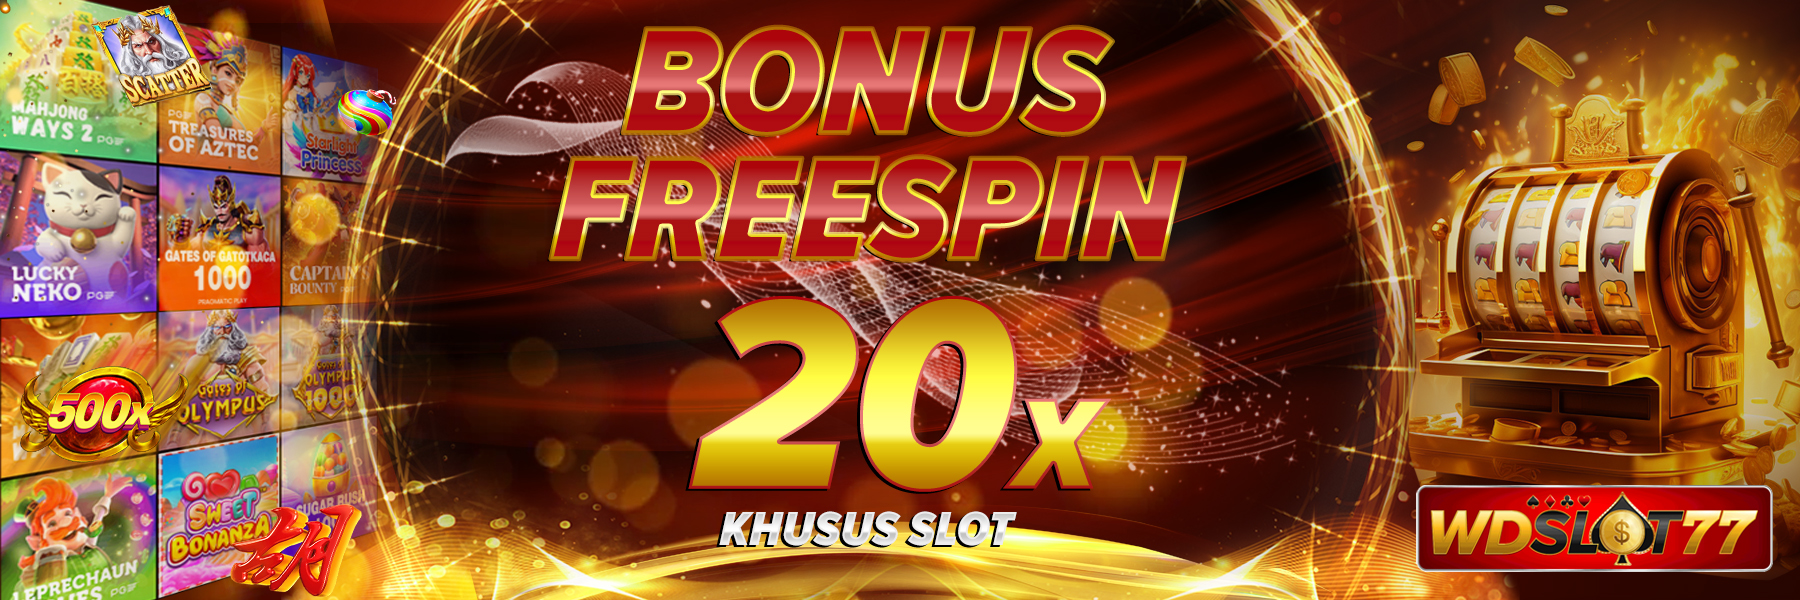 BONUS FREESPIN 20x